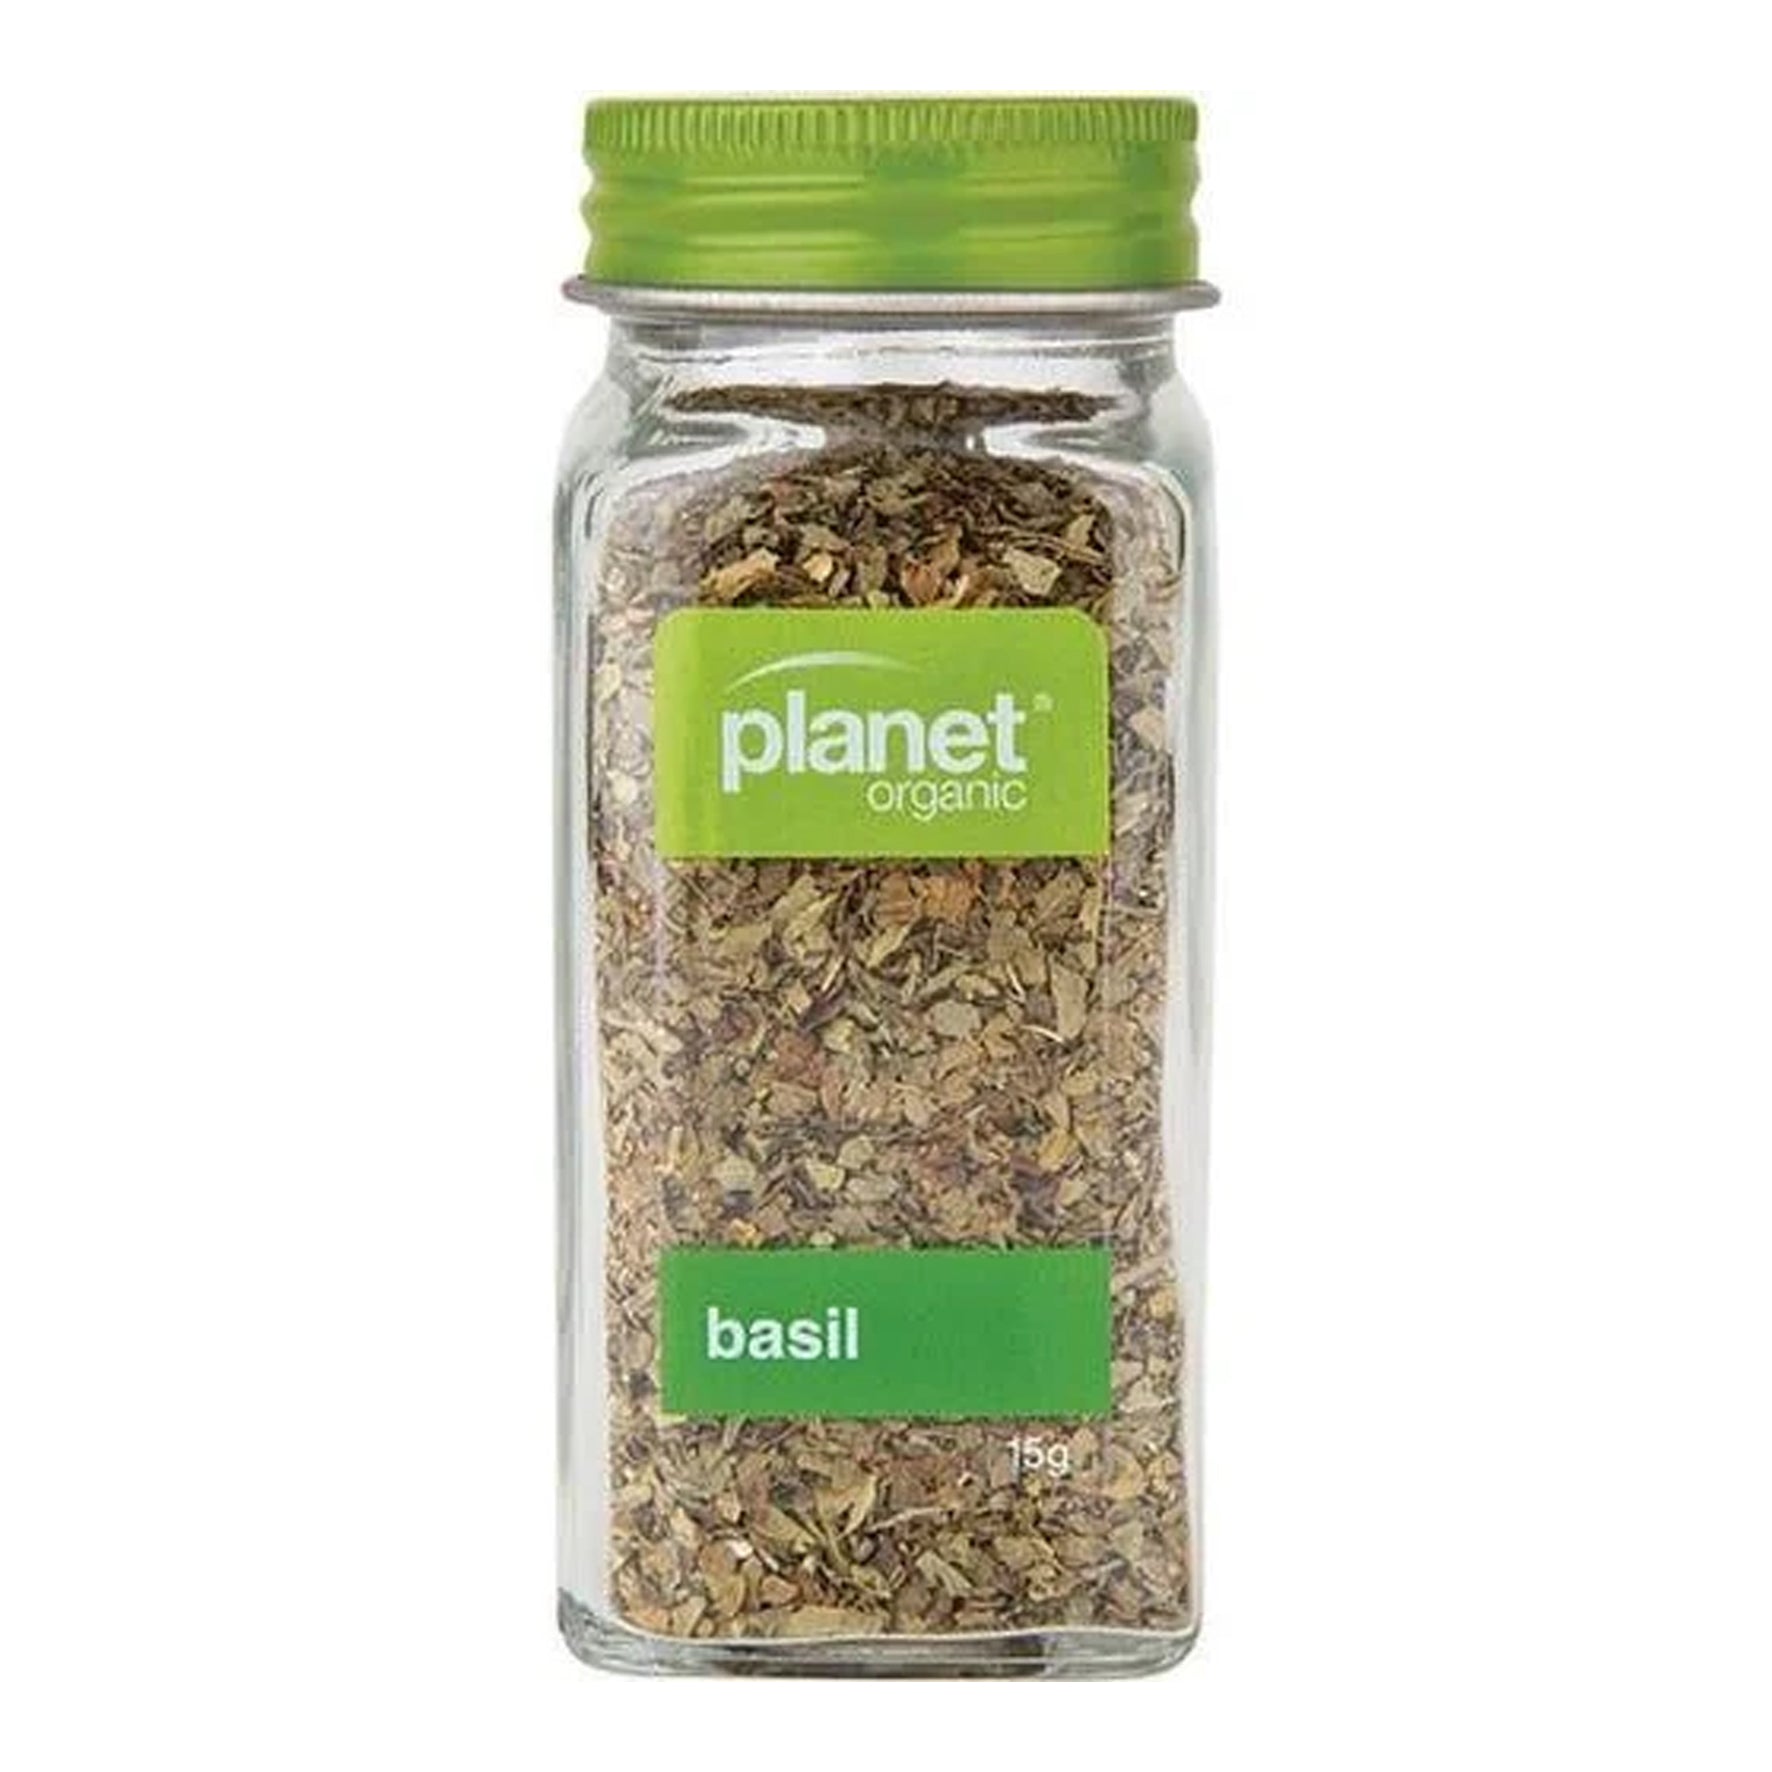 Planet Organic Herbs - Basil 15g